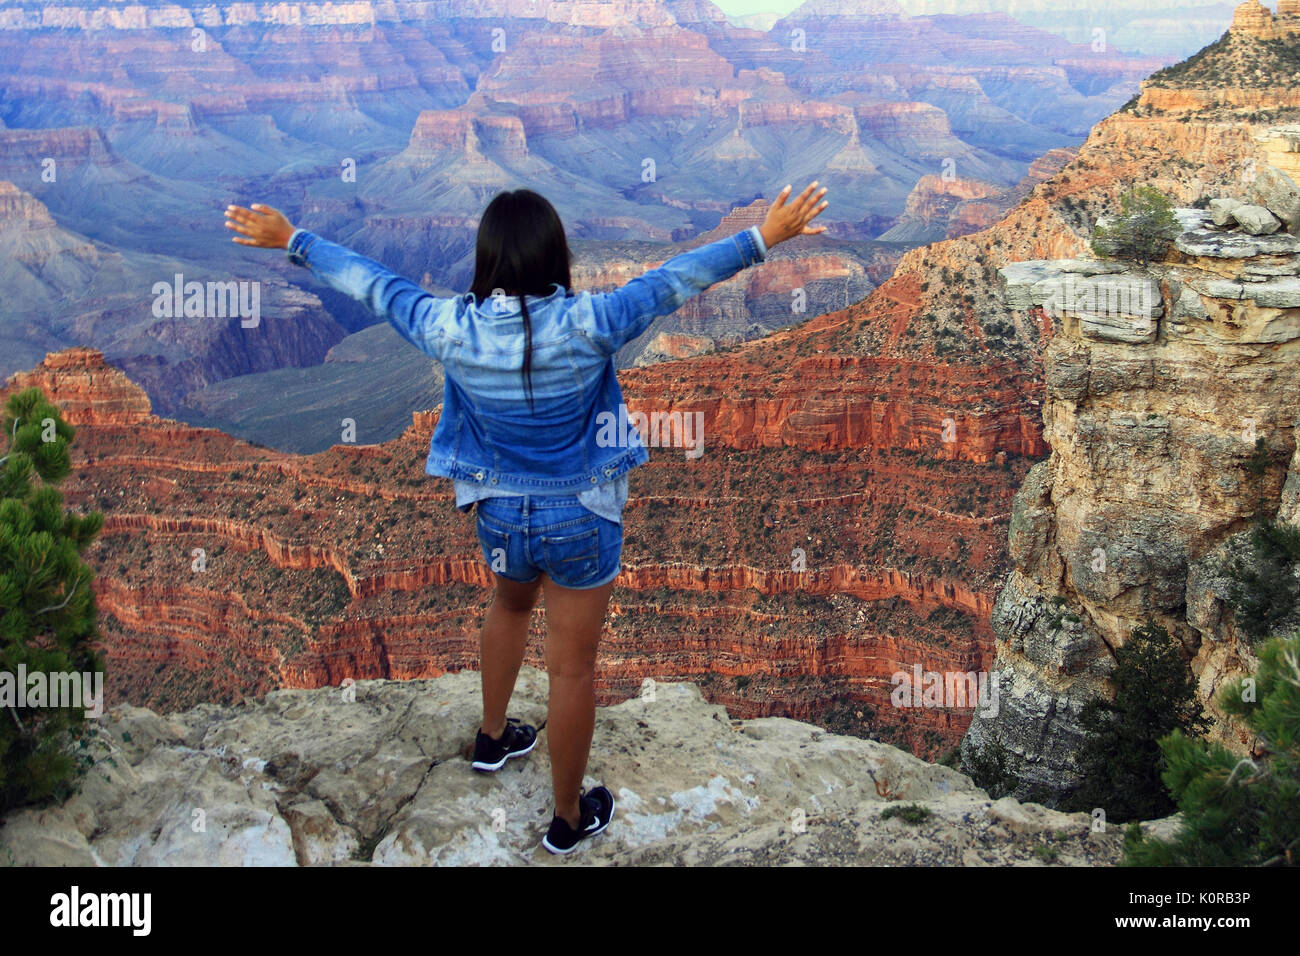 Grand-Canyon-Nationalpark Arizona USA Stockfoto